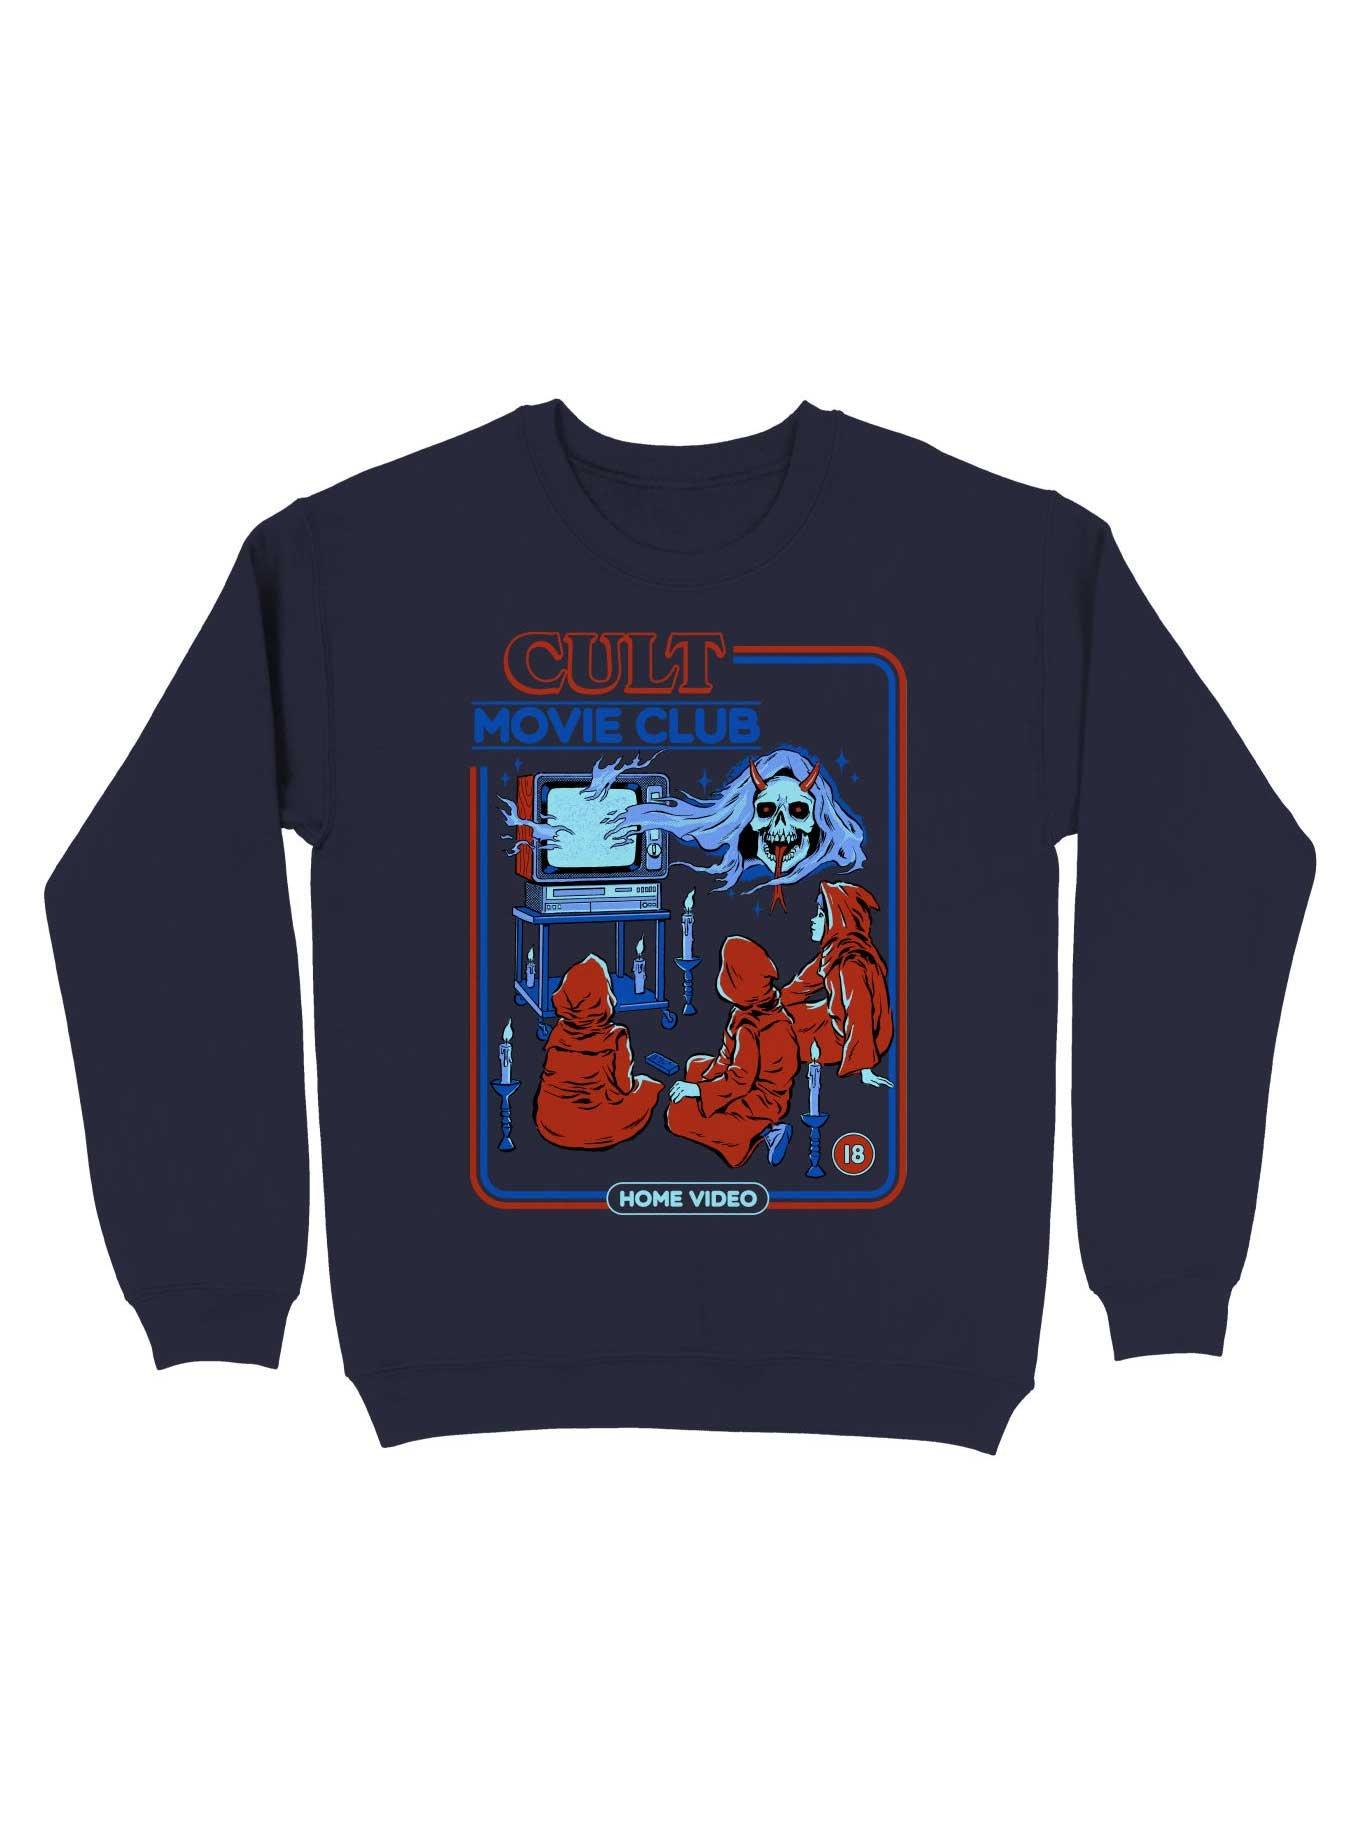 Cult Movie Club Sweatshirt By Steven Rhodes